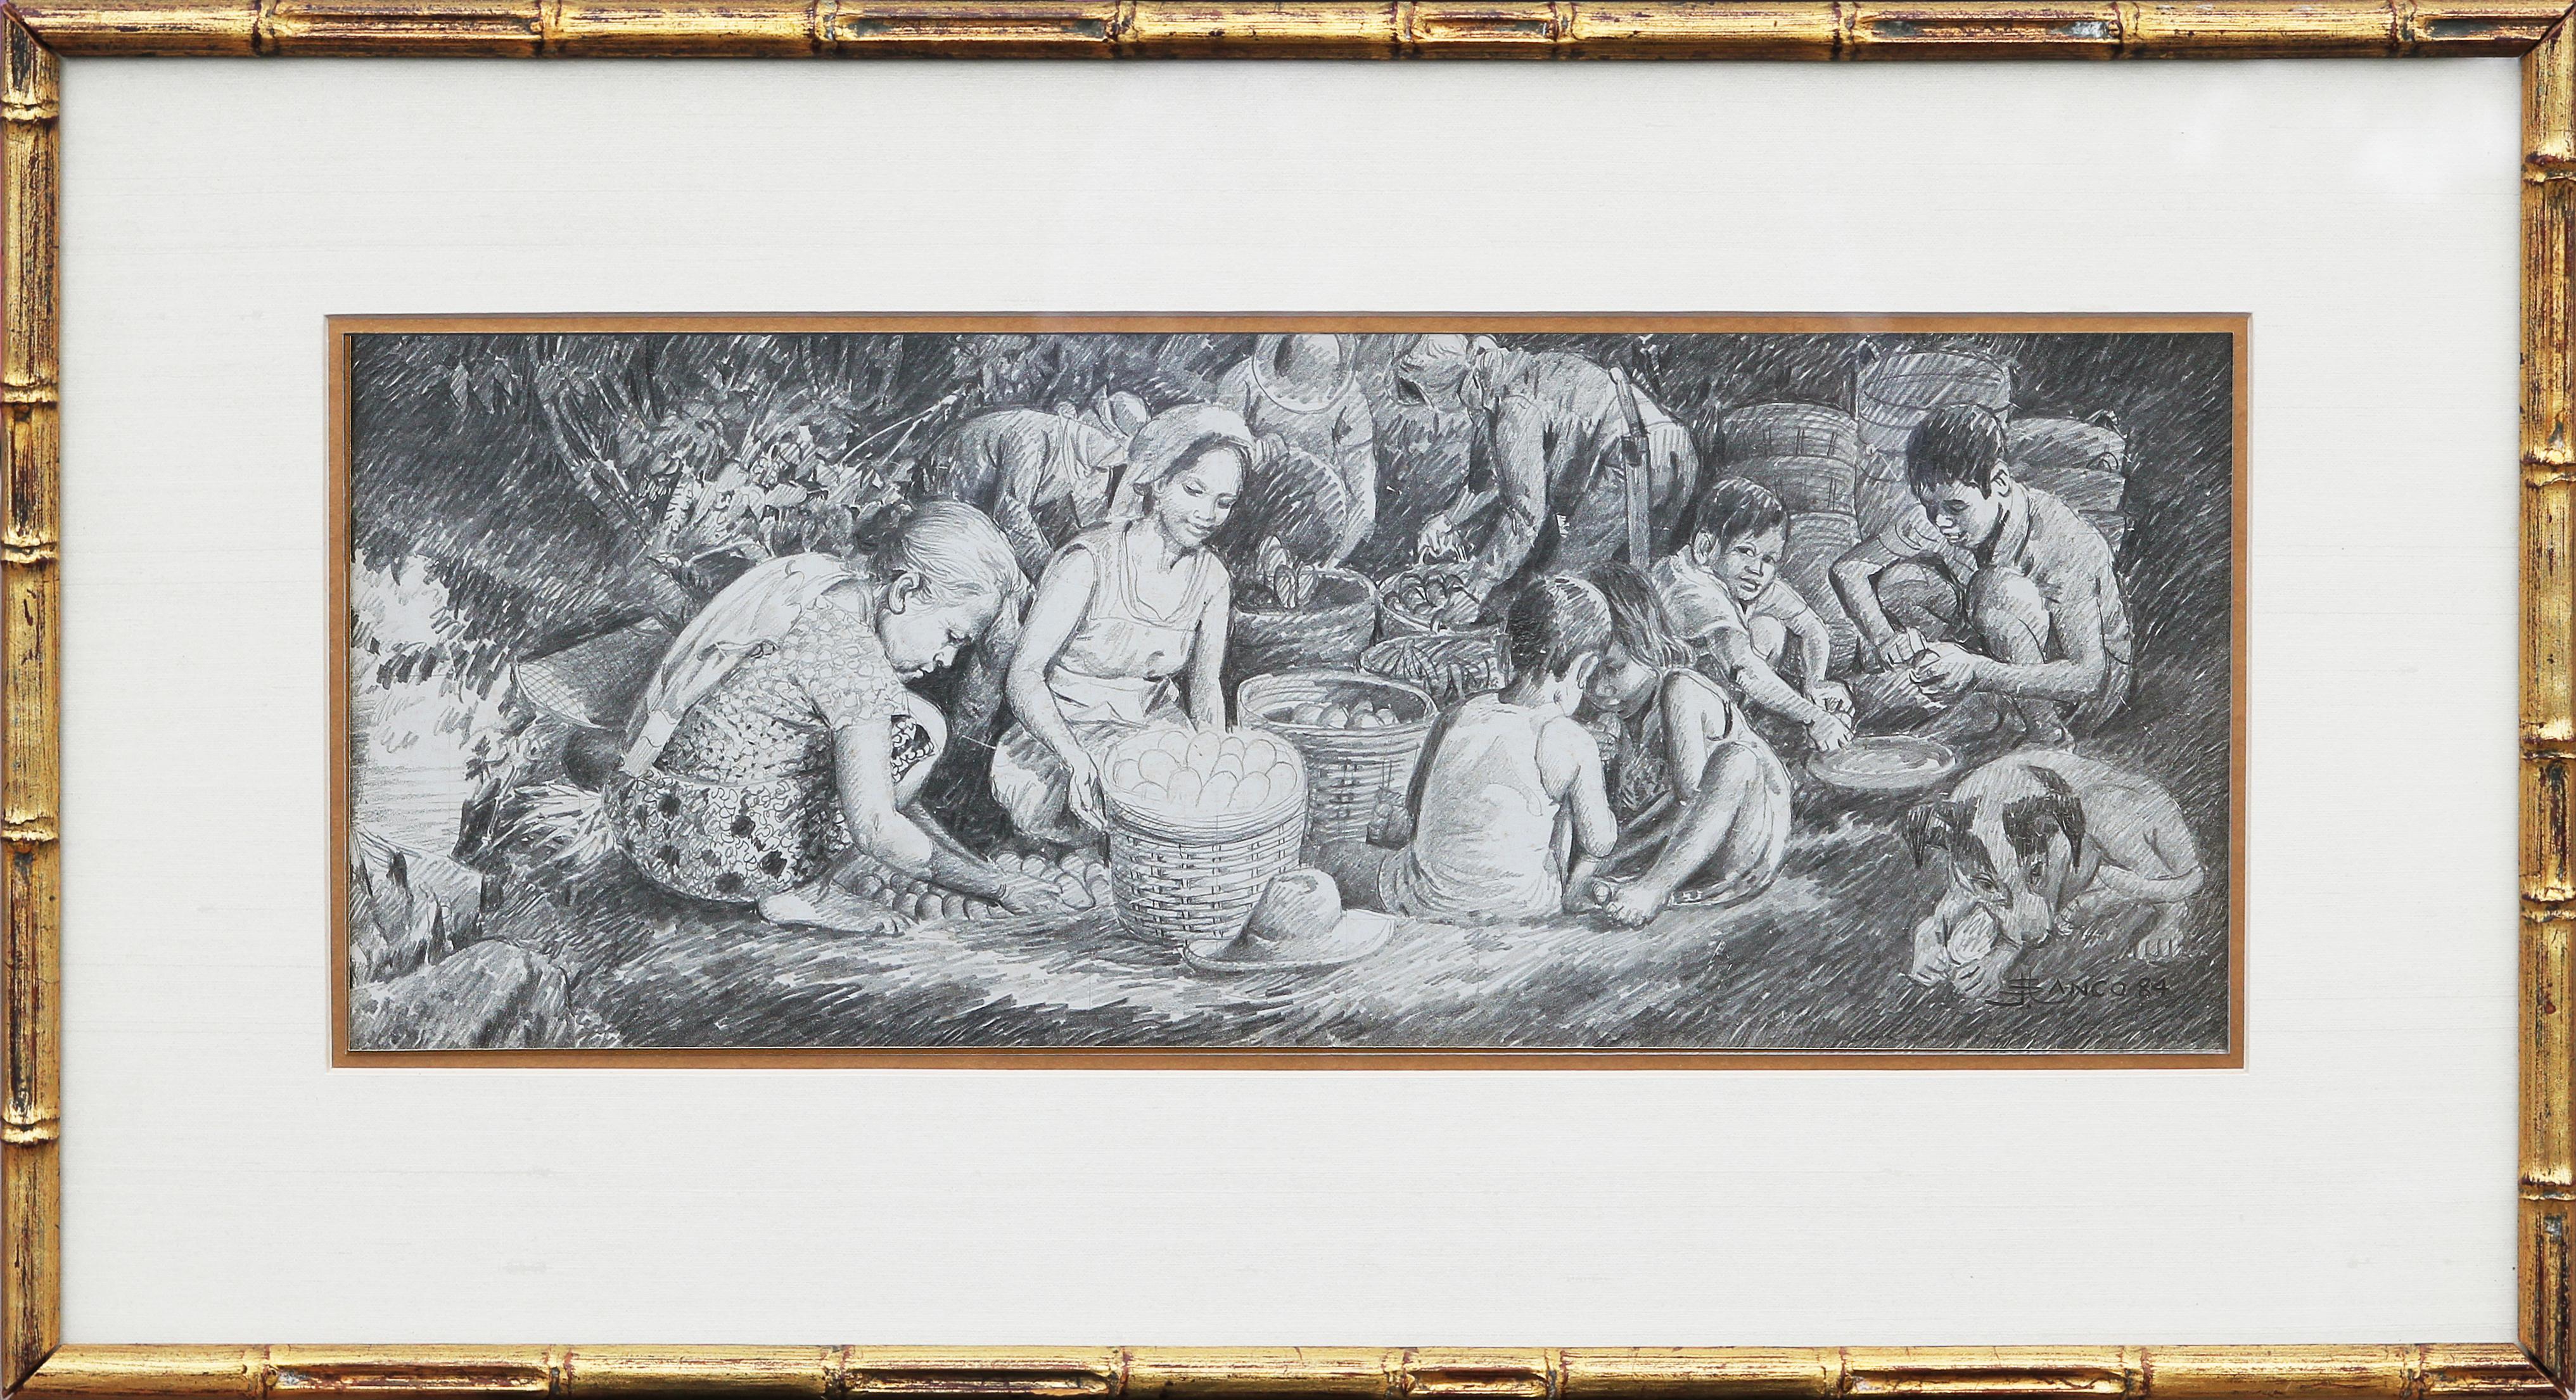 Filipino Women and Children in a Pastoral Scene Drawing